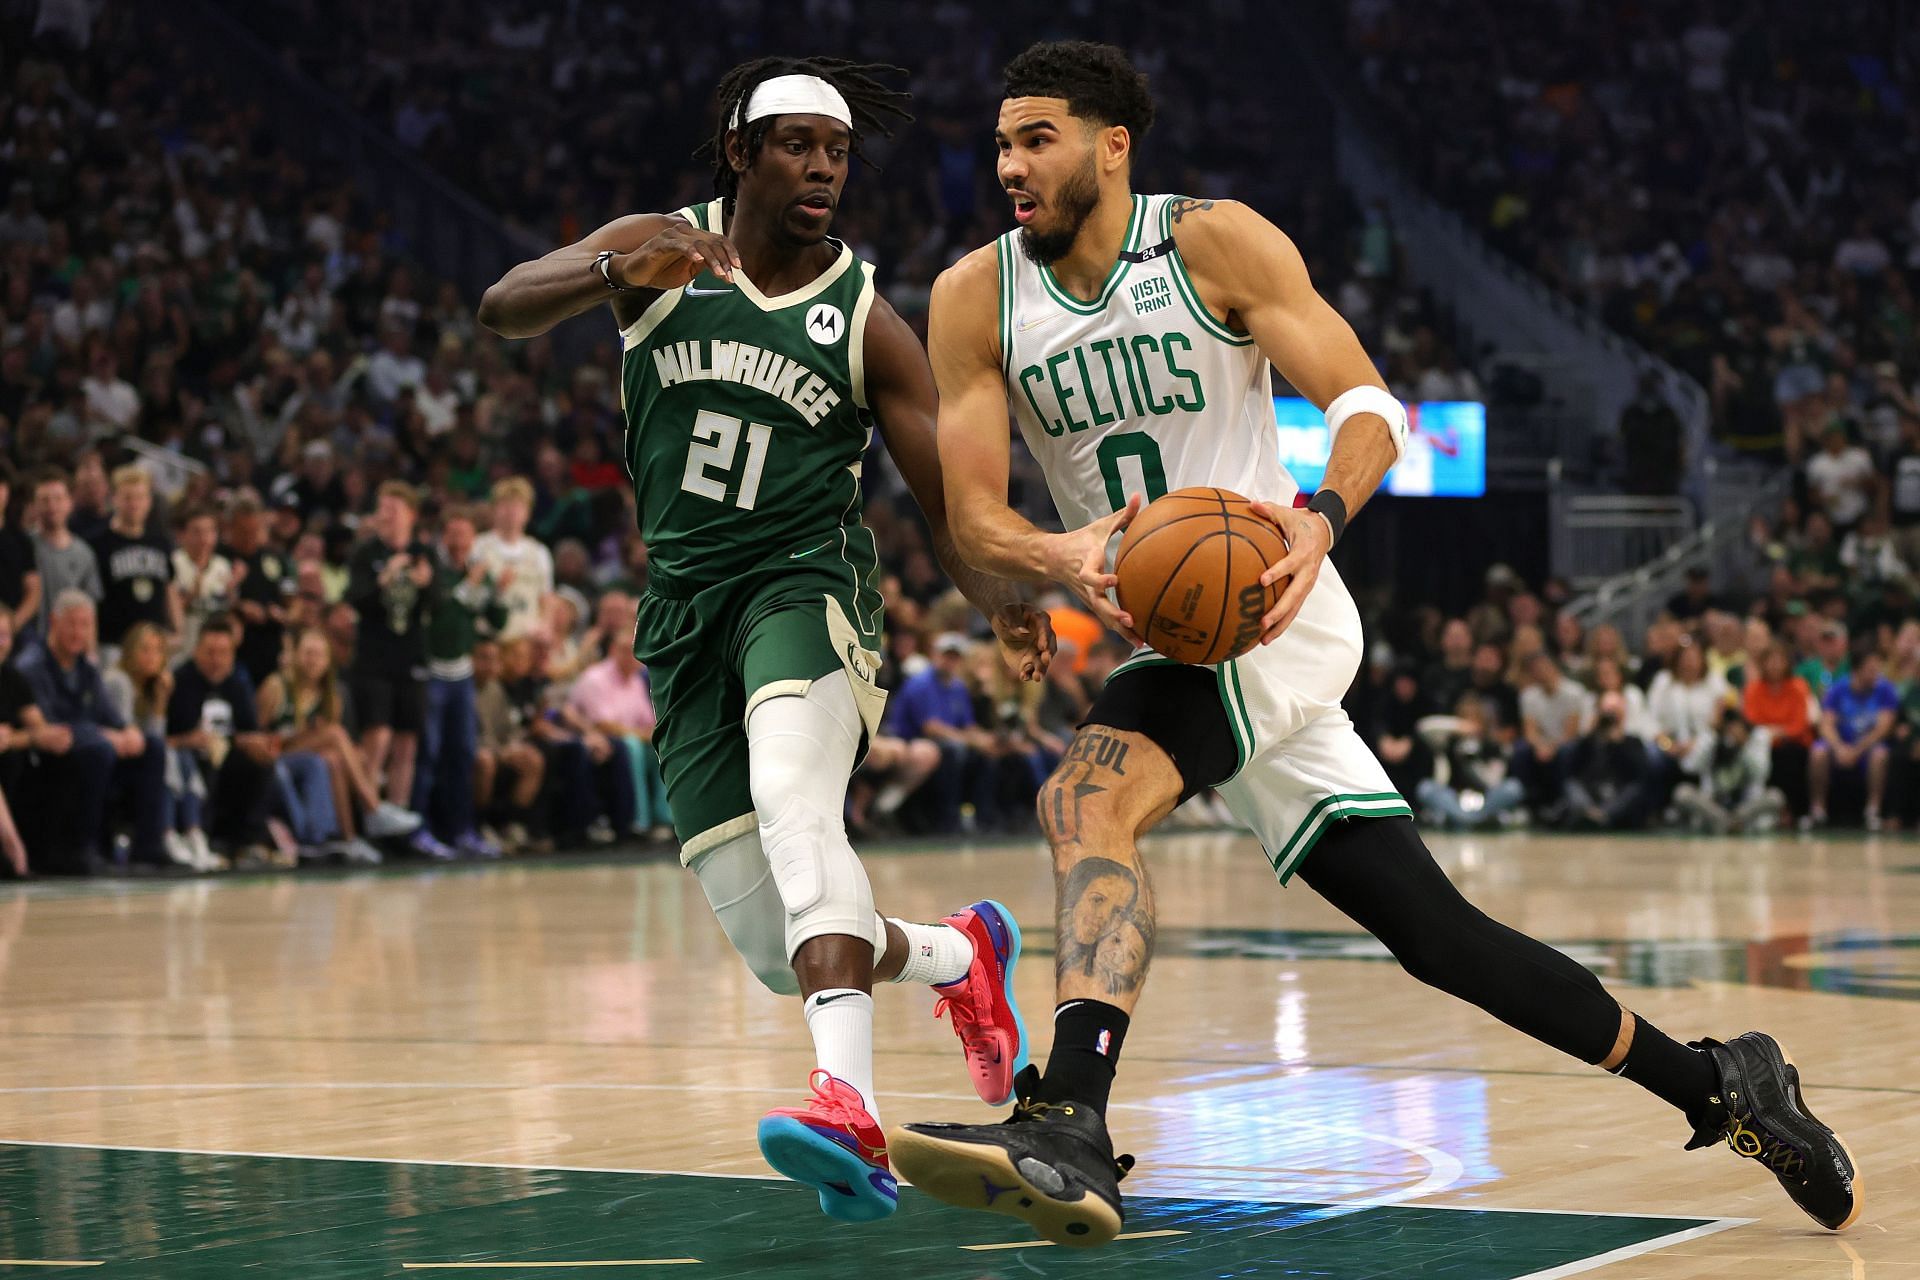 Jayson Tatum ended up scoring 46 points for the Boston Celtics in Game 6 against the Bucks.